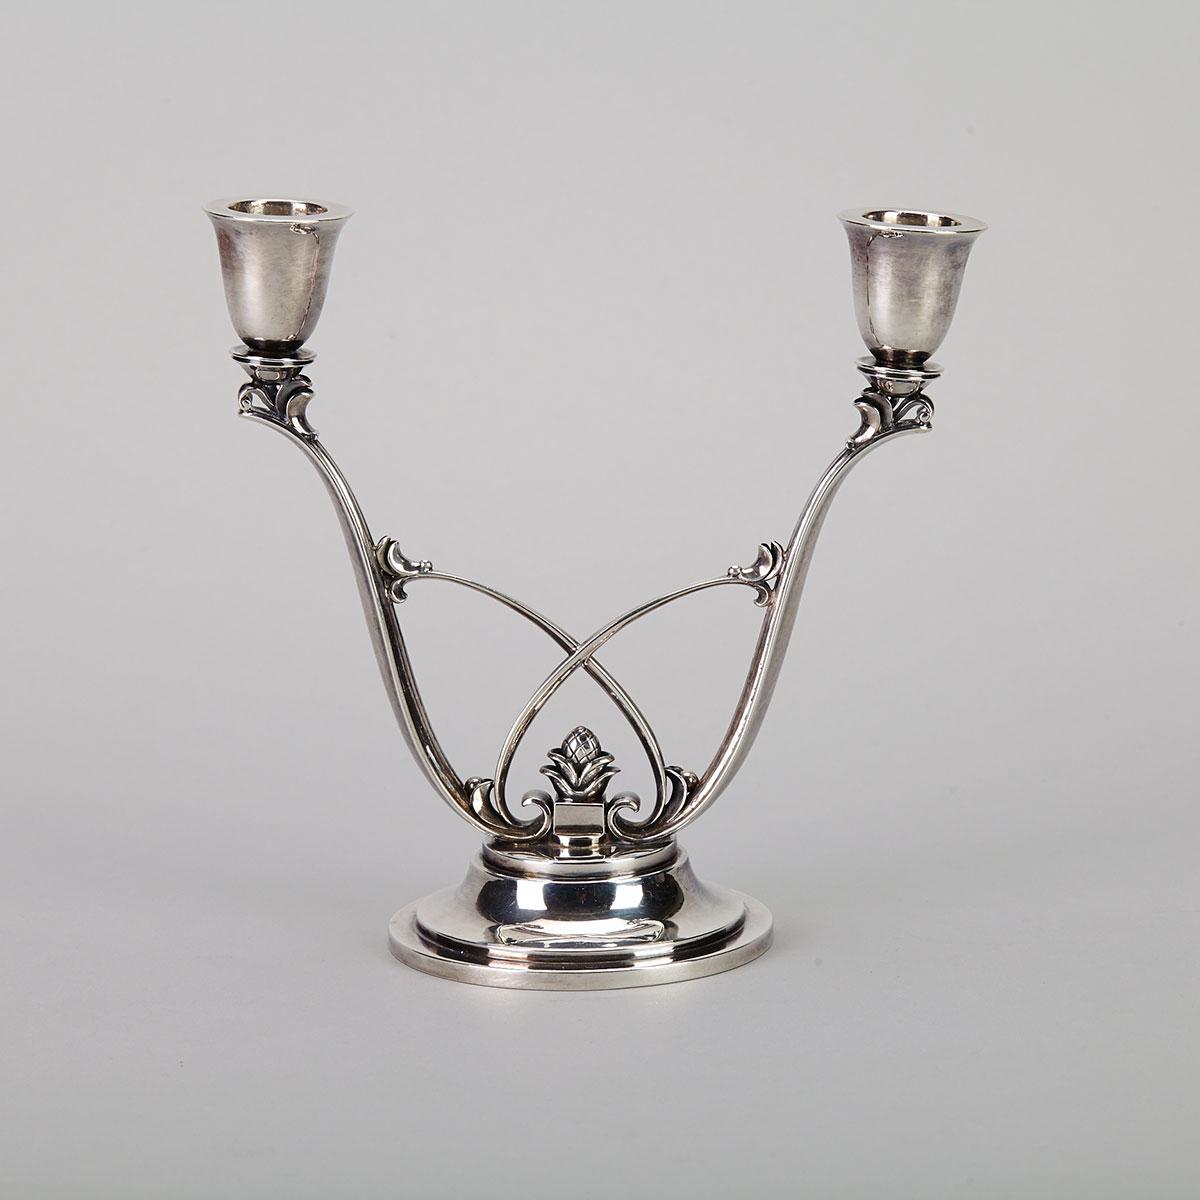 Danish Silver ‘Acorn’ Pattern Two-Light Candelabrum, #619, Harald Nielson for Georg Jensen, Copenhagen, mid-20th century